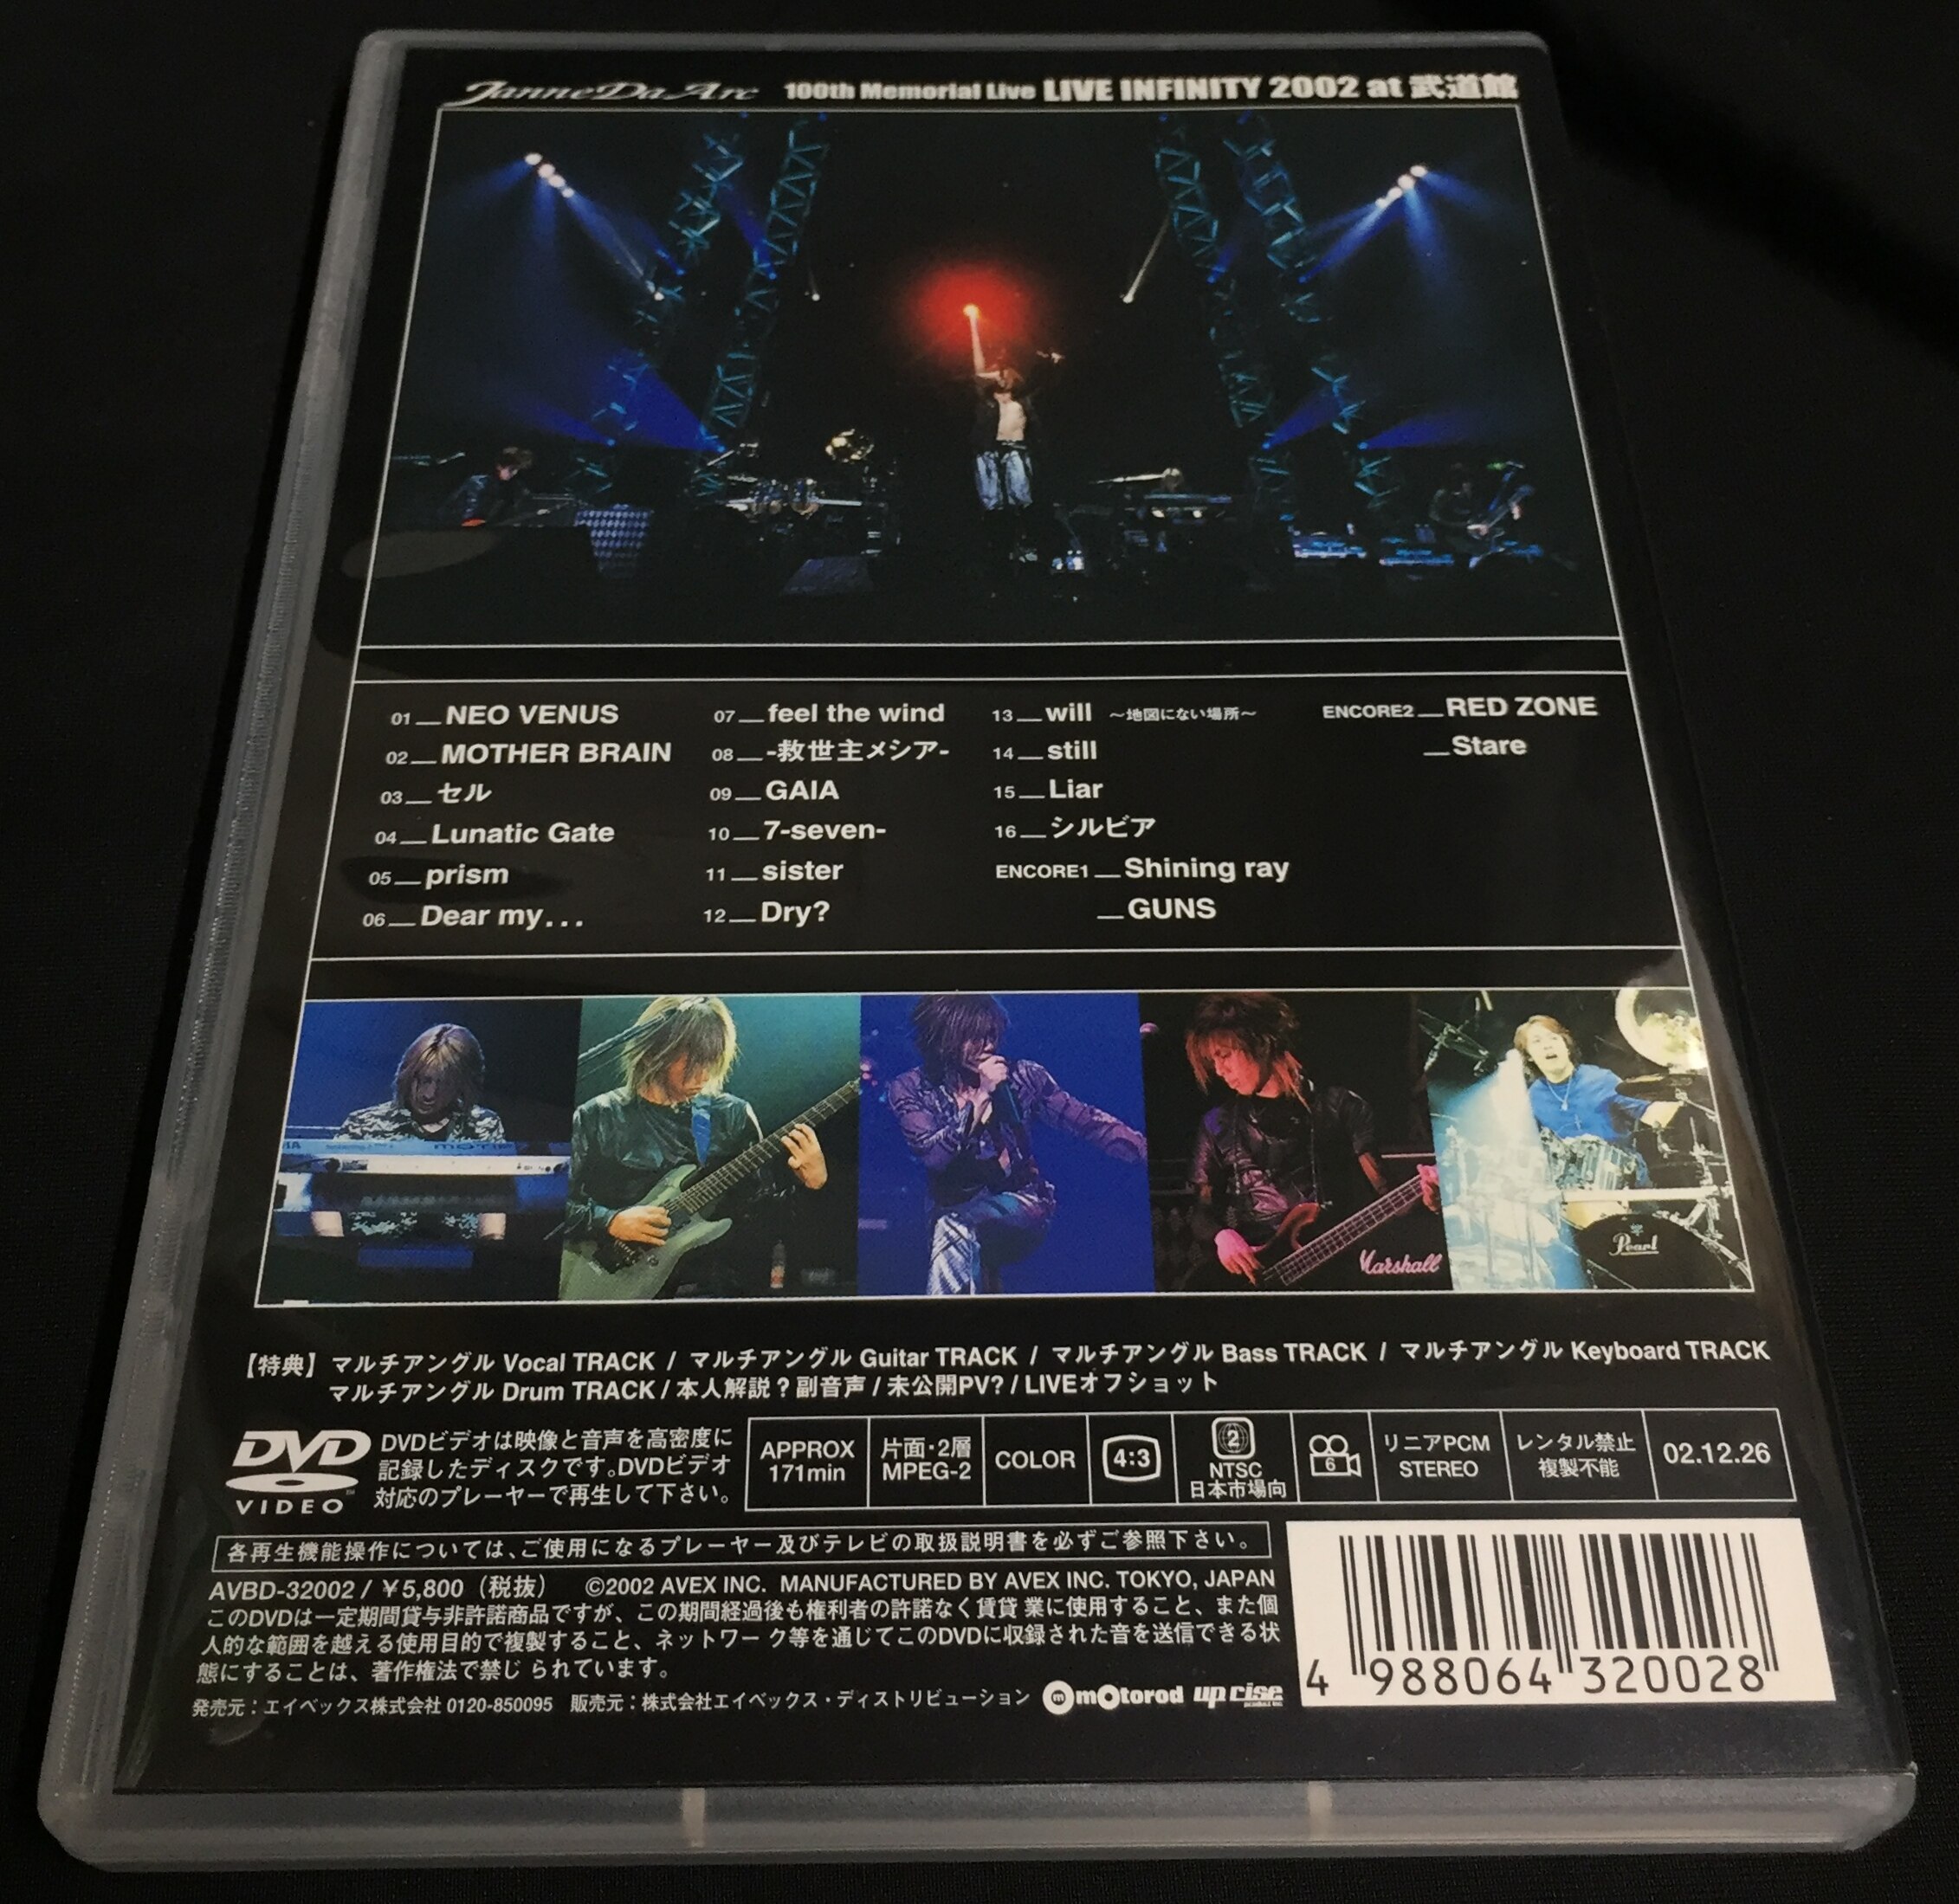 Janne Da Arc DVD 100th Memorial Live LIVE INFINITY 2002 at 武道館 